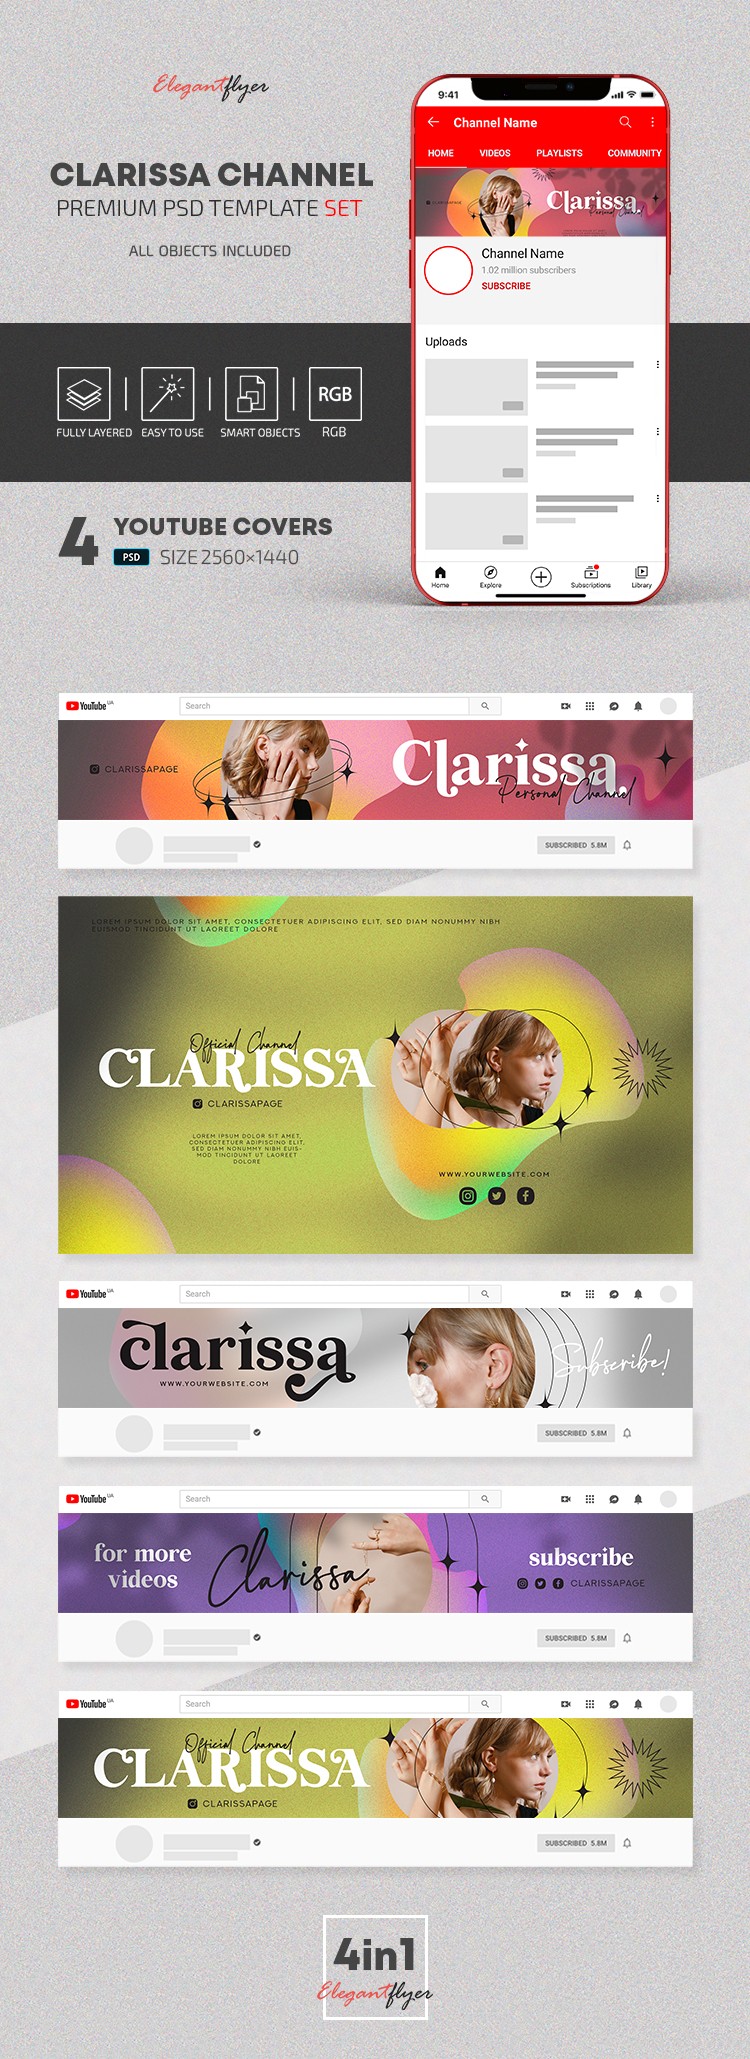 Chaîne Youtube Clarissa by ElegantFlyer